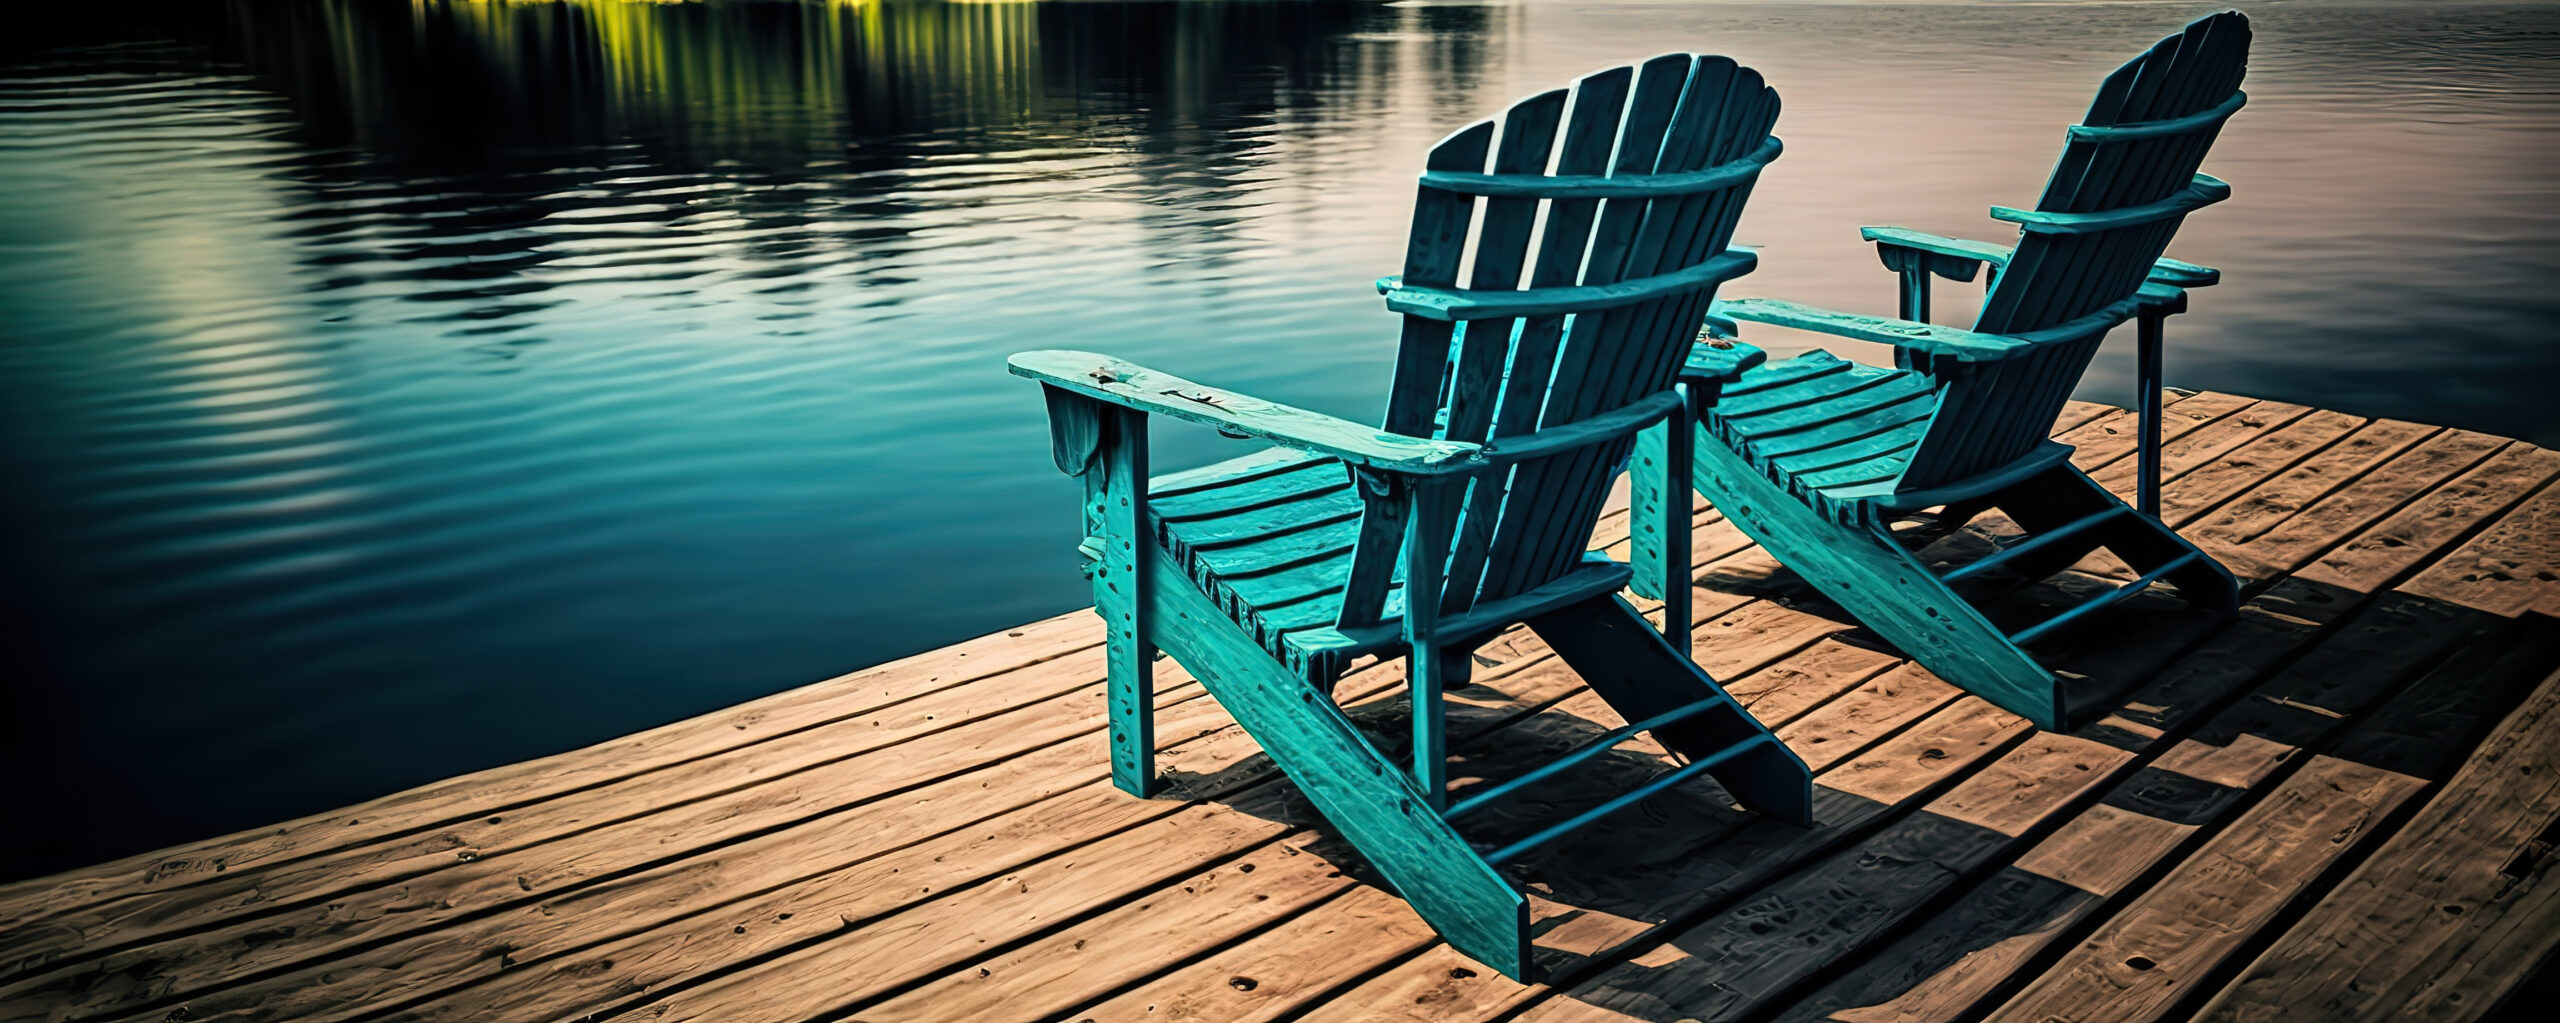 Blue muskoka chairs on a dock overlooking a lake.